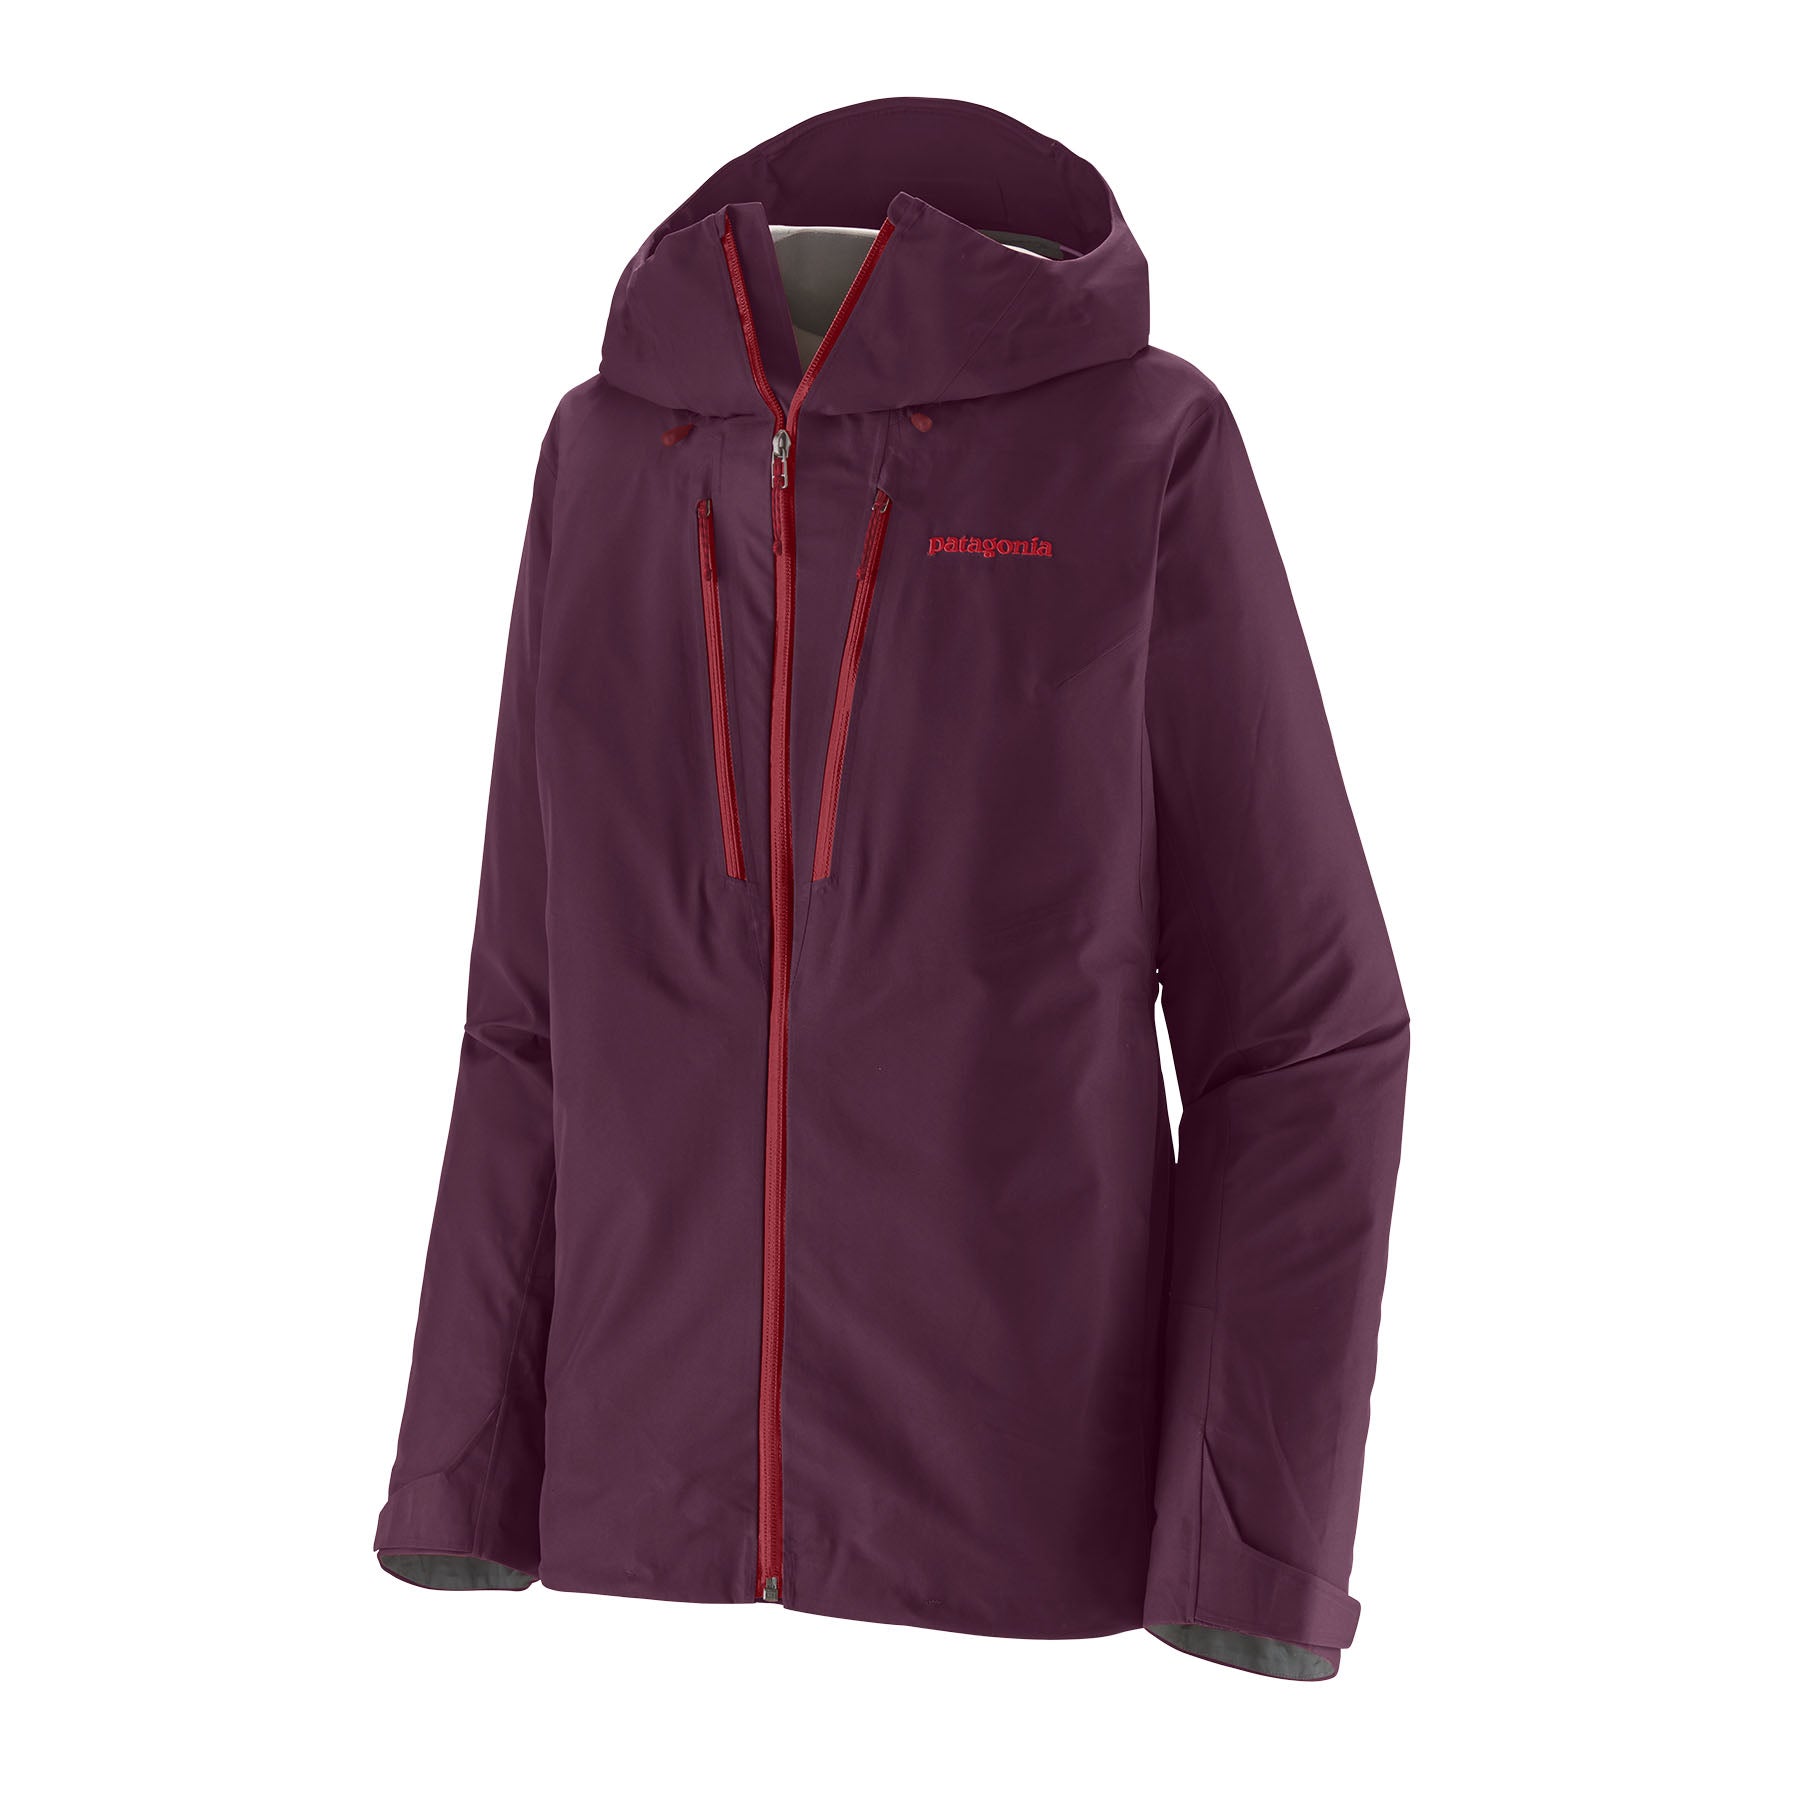 Patagonia Triolet Jacket - Women's XS - Coats & Jackets - Napa, California, Facebook Marketplace